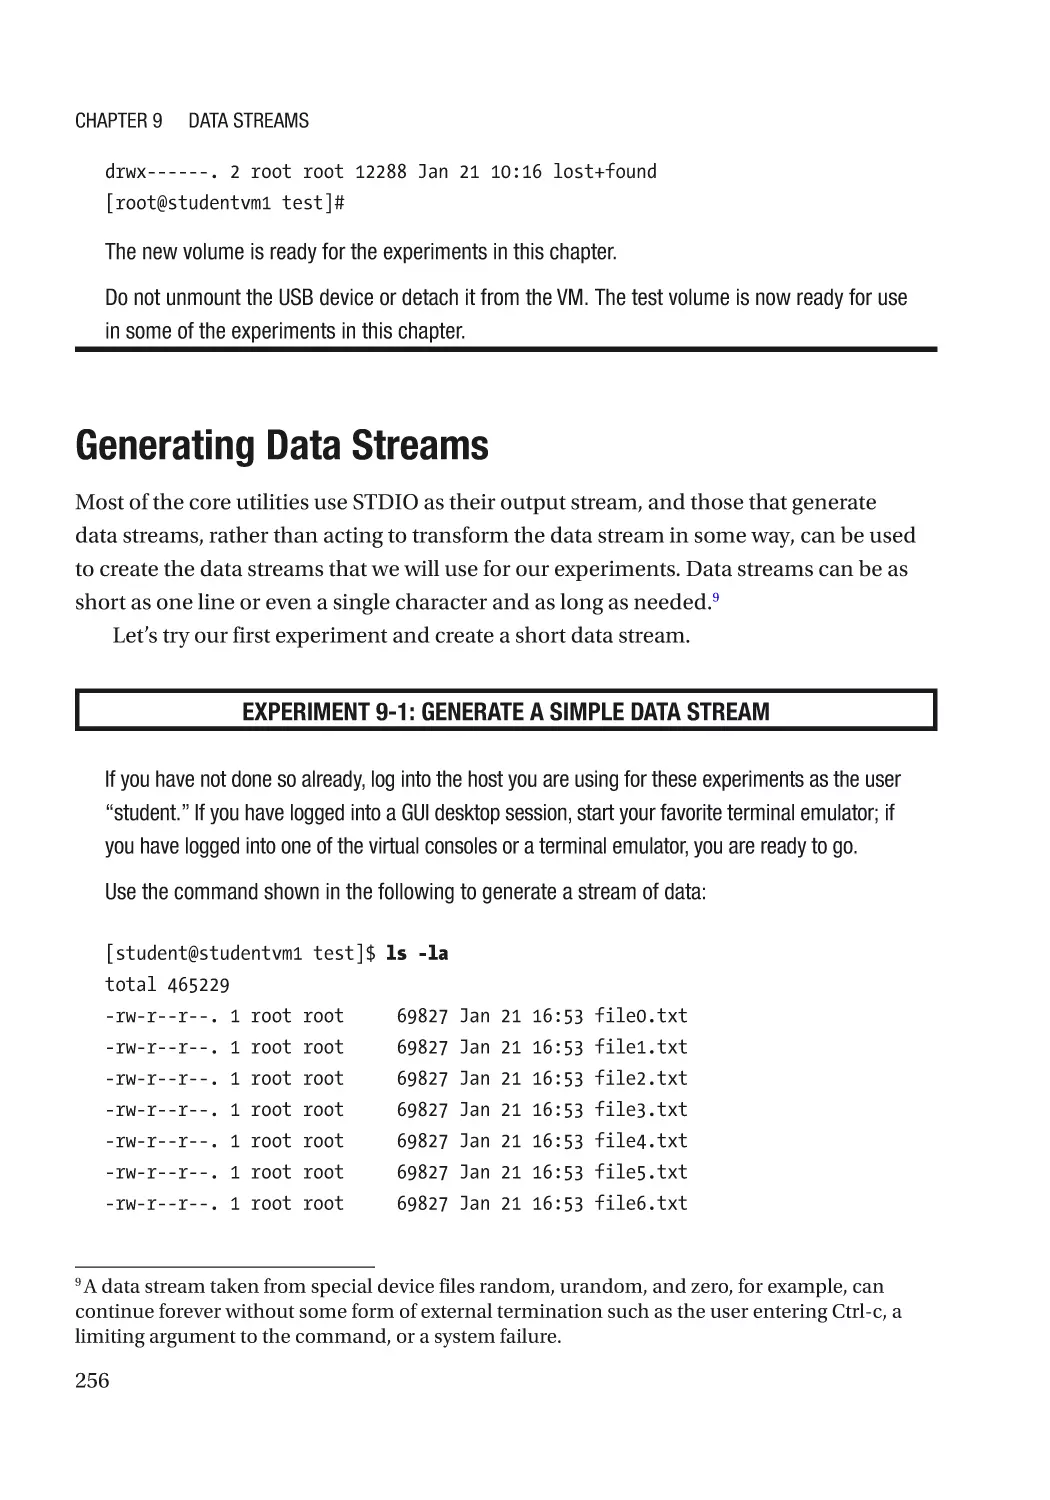 Generating Data Streams